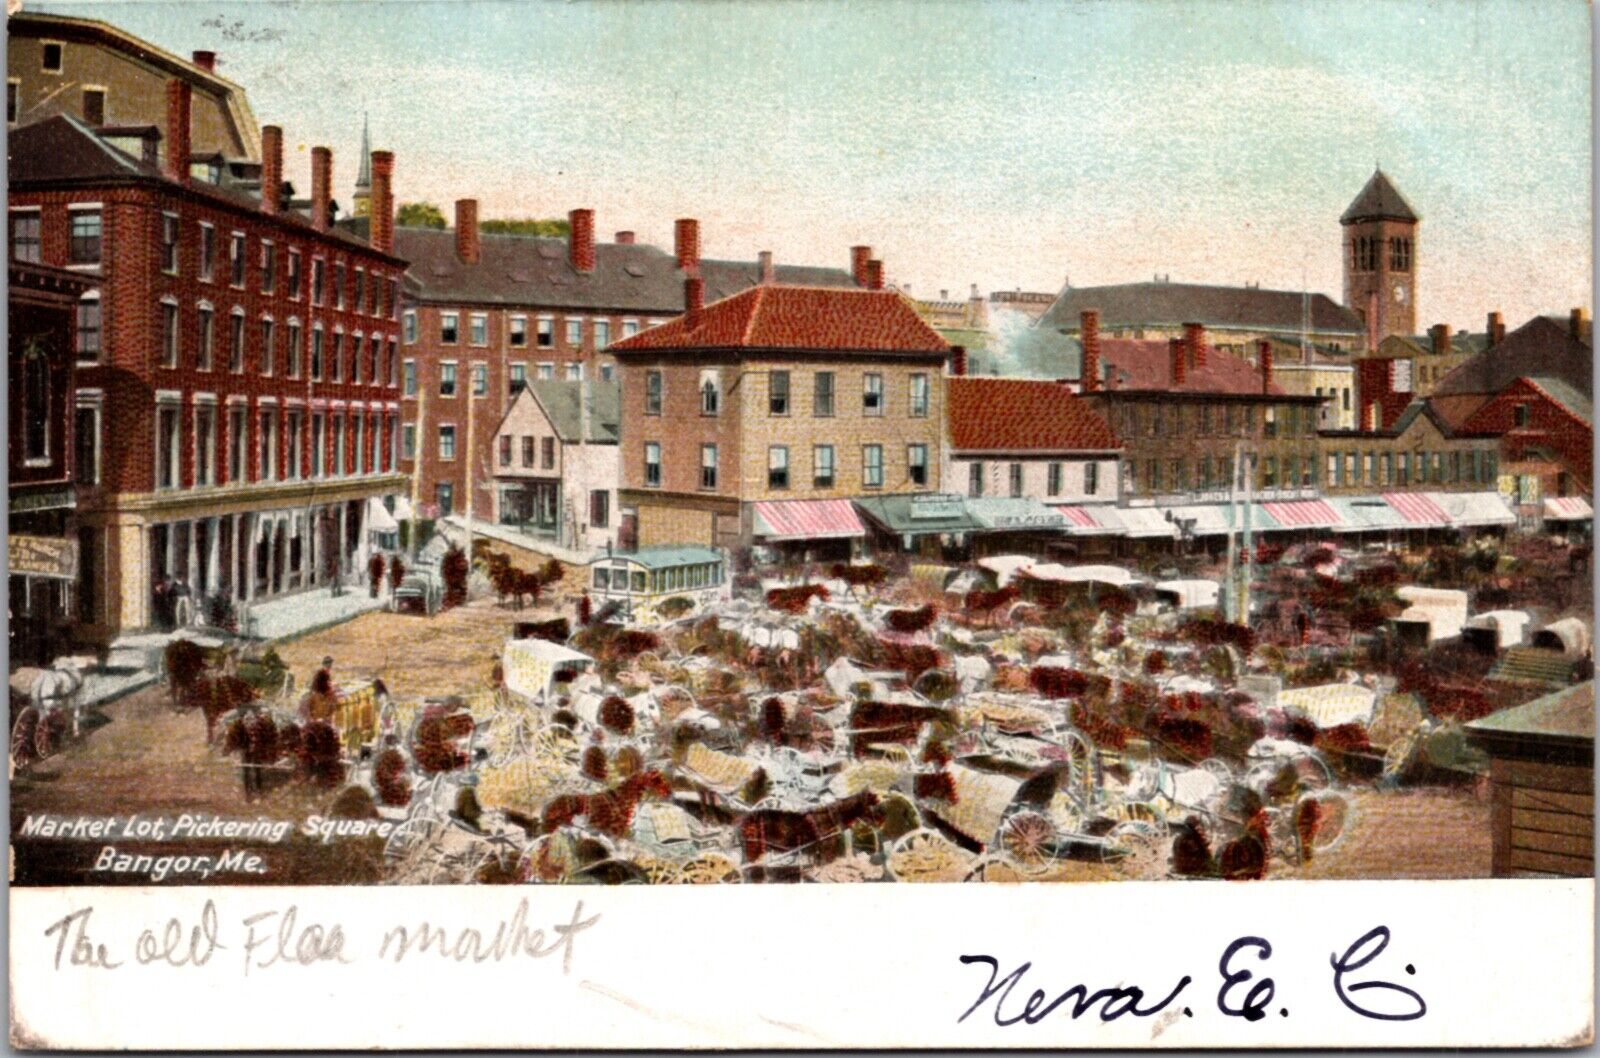 Postcard Market Lot, Pickering Square in Bangor, Maine